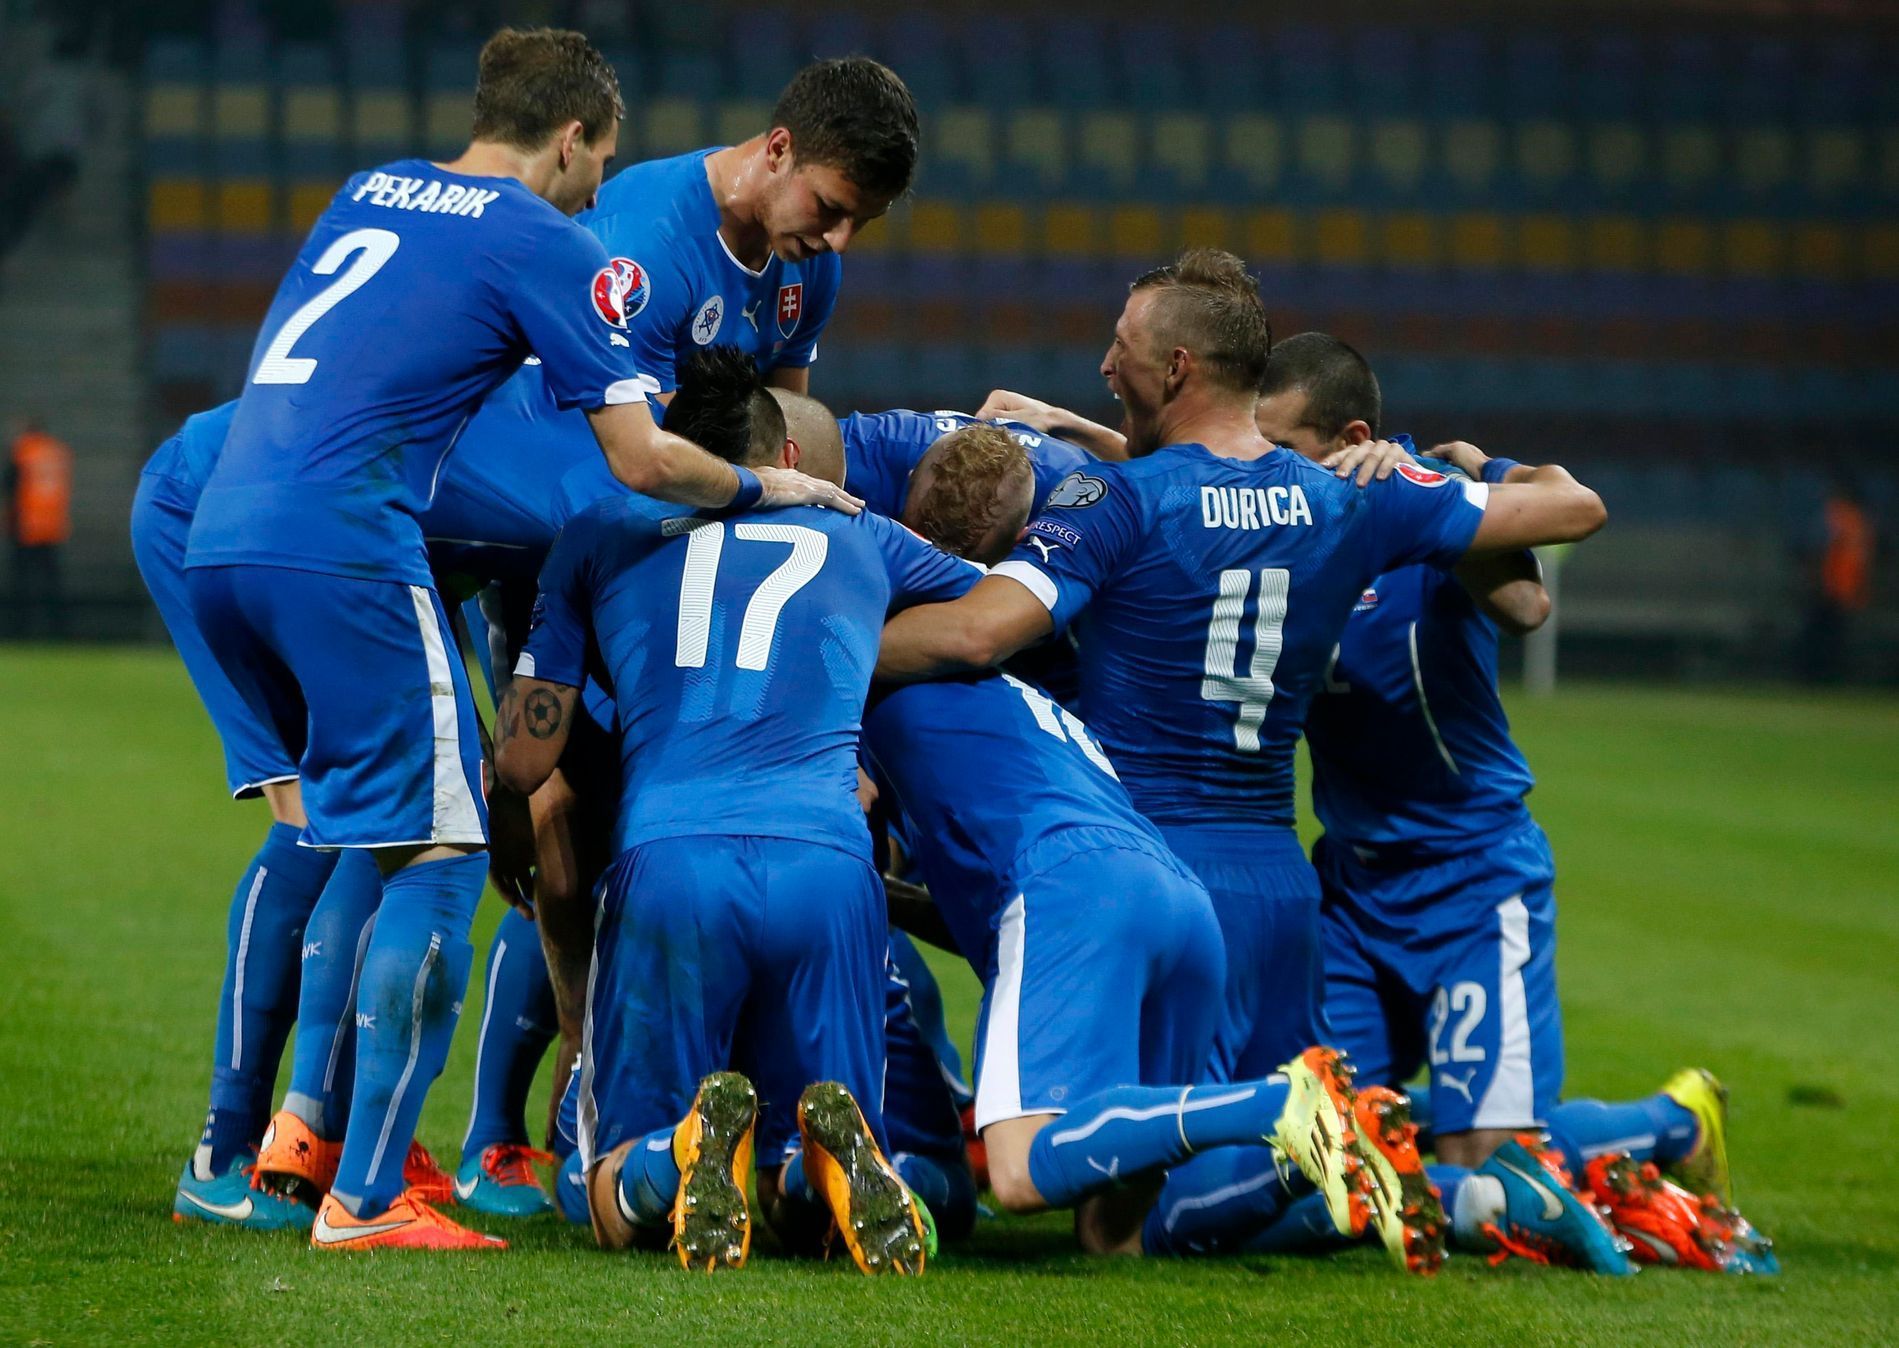 Bělorusko vs. Slovensko, kvalifikace Euro 2016